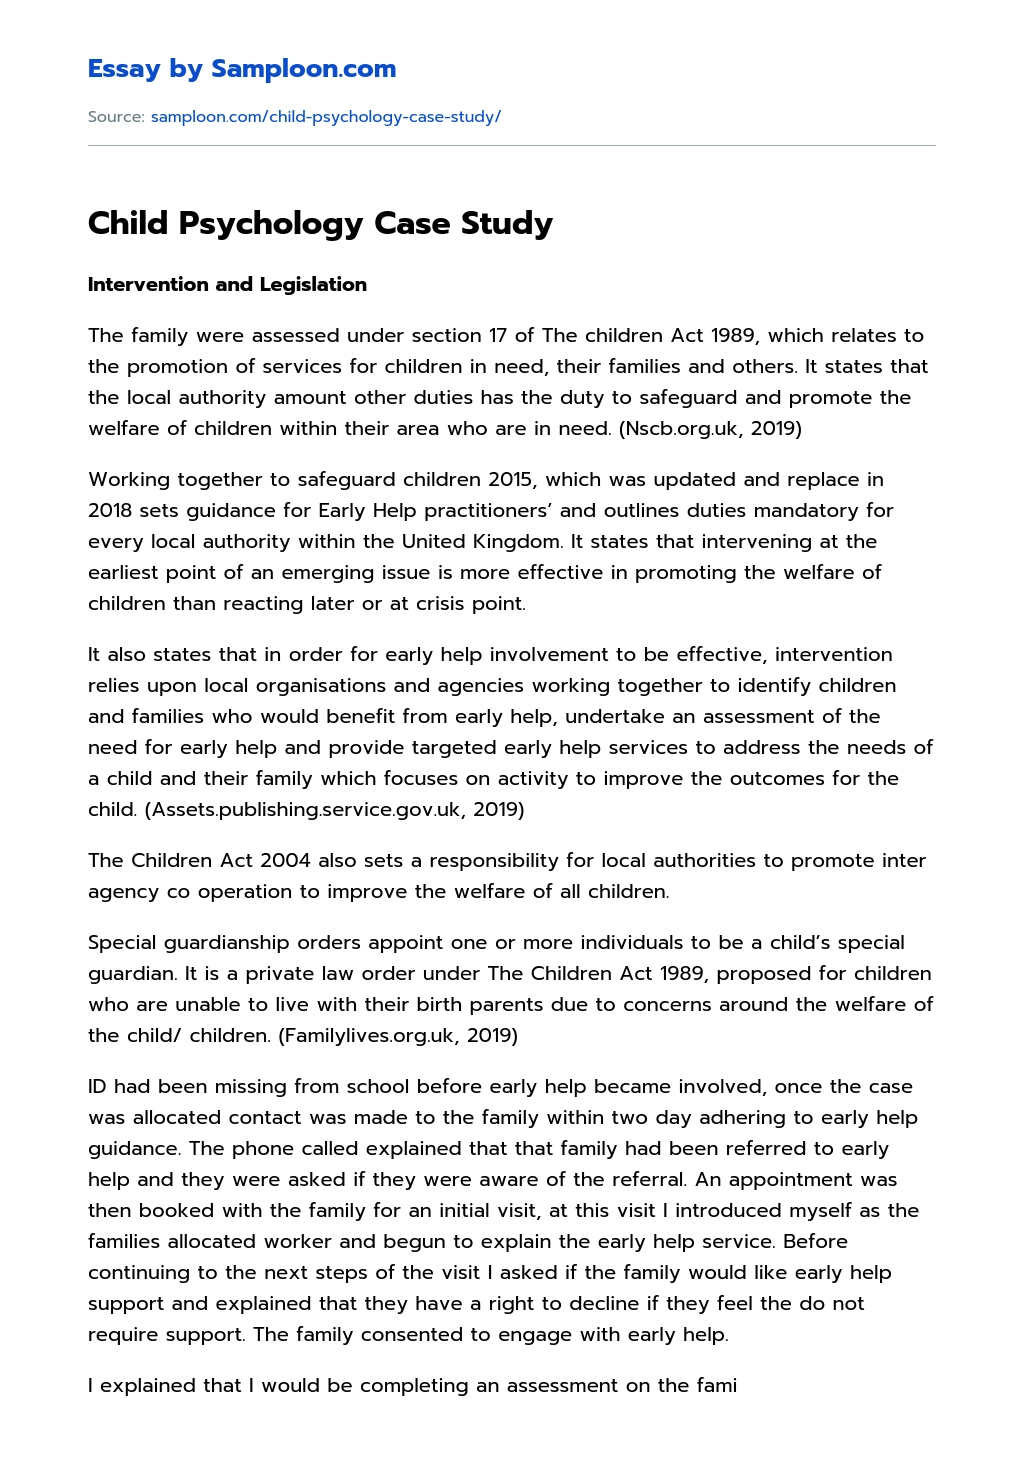 Child Psychology Case Study essay